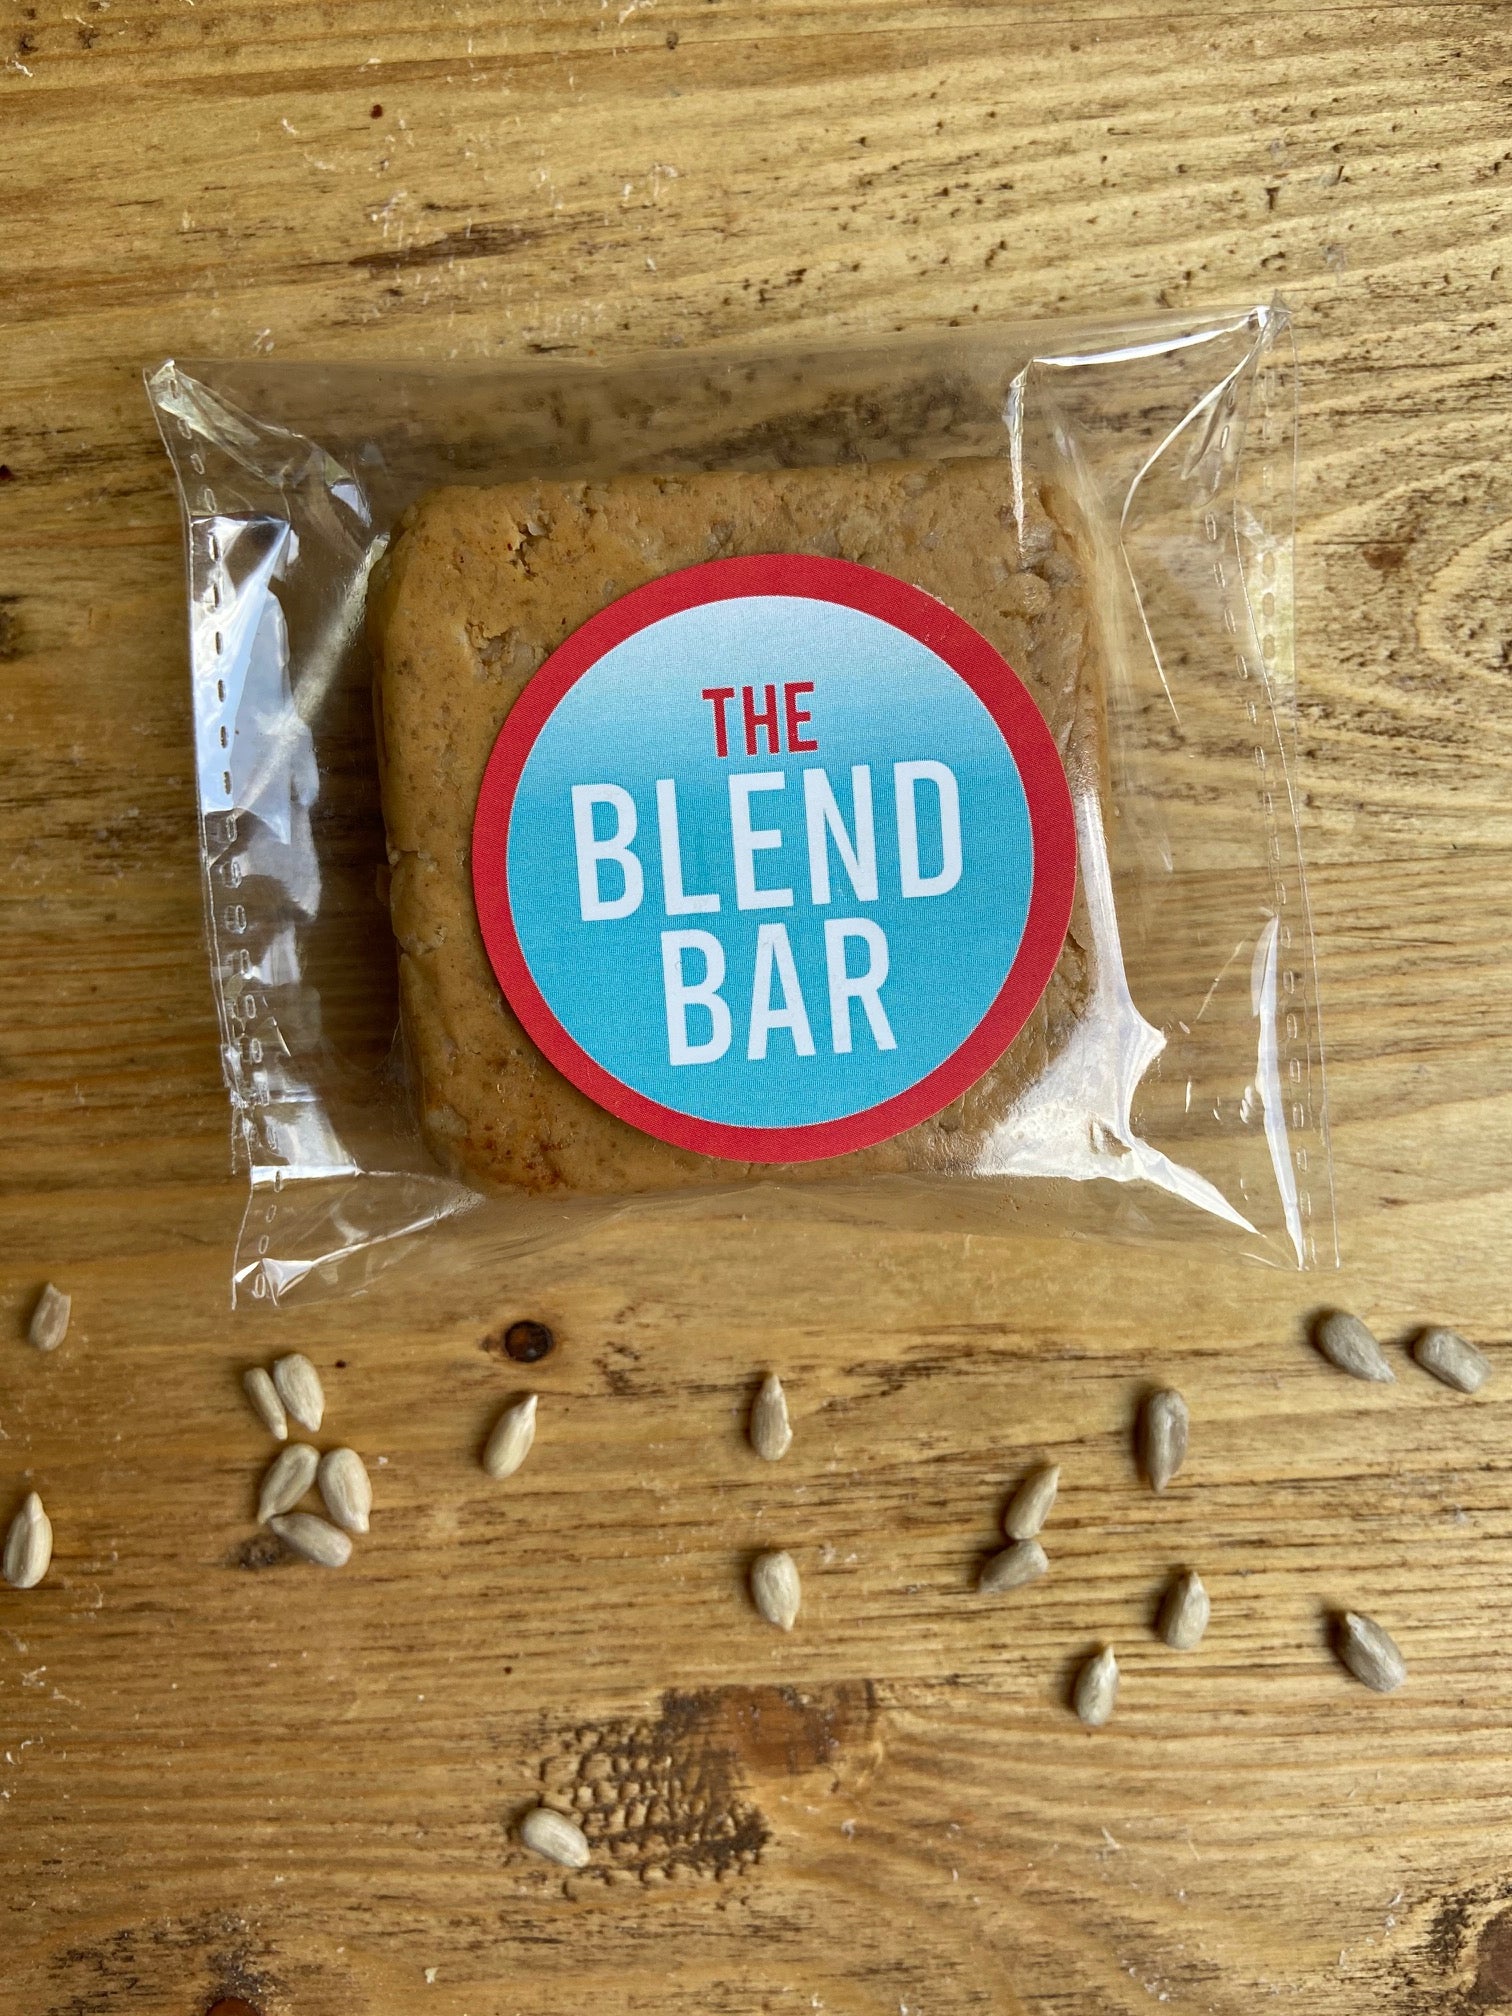 The Blend Bar Variety 8-Pack!